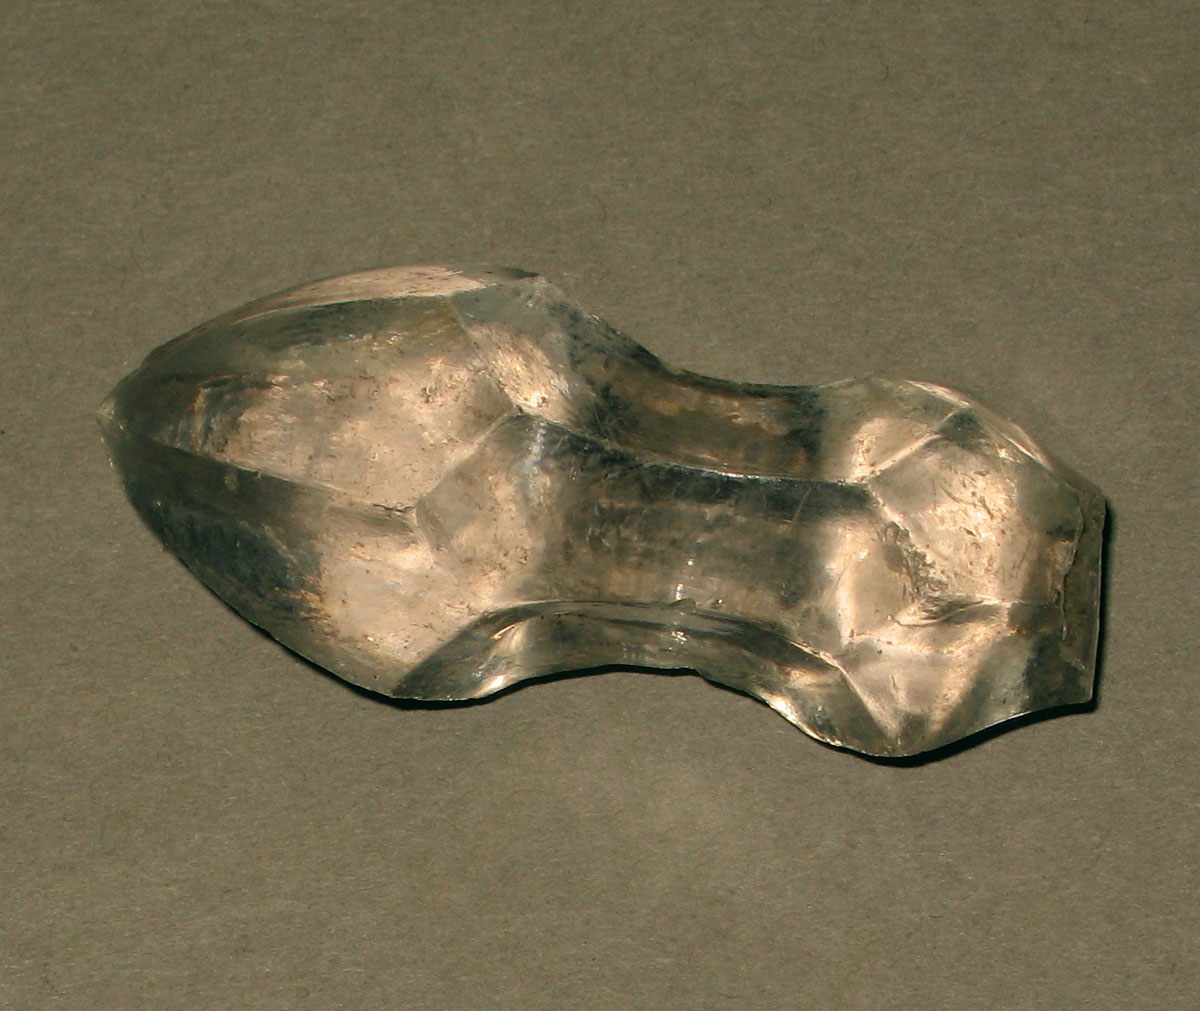 1958.0002.006.005 Glass fragment